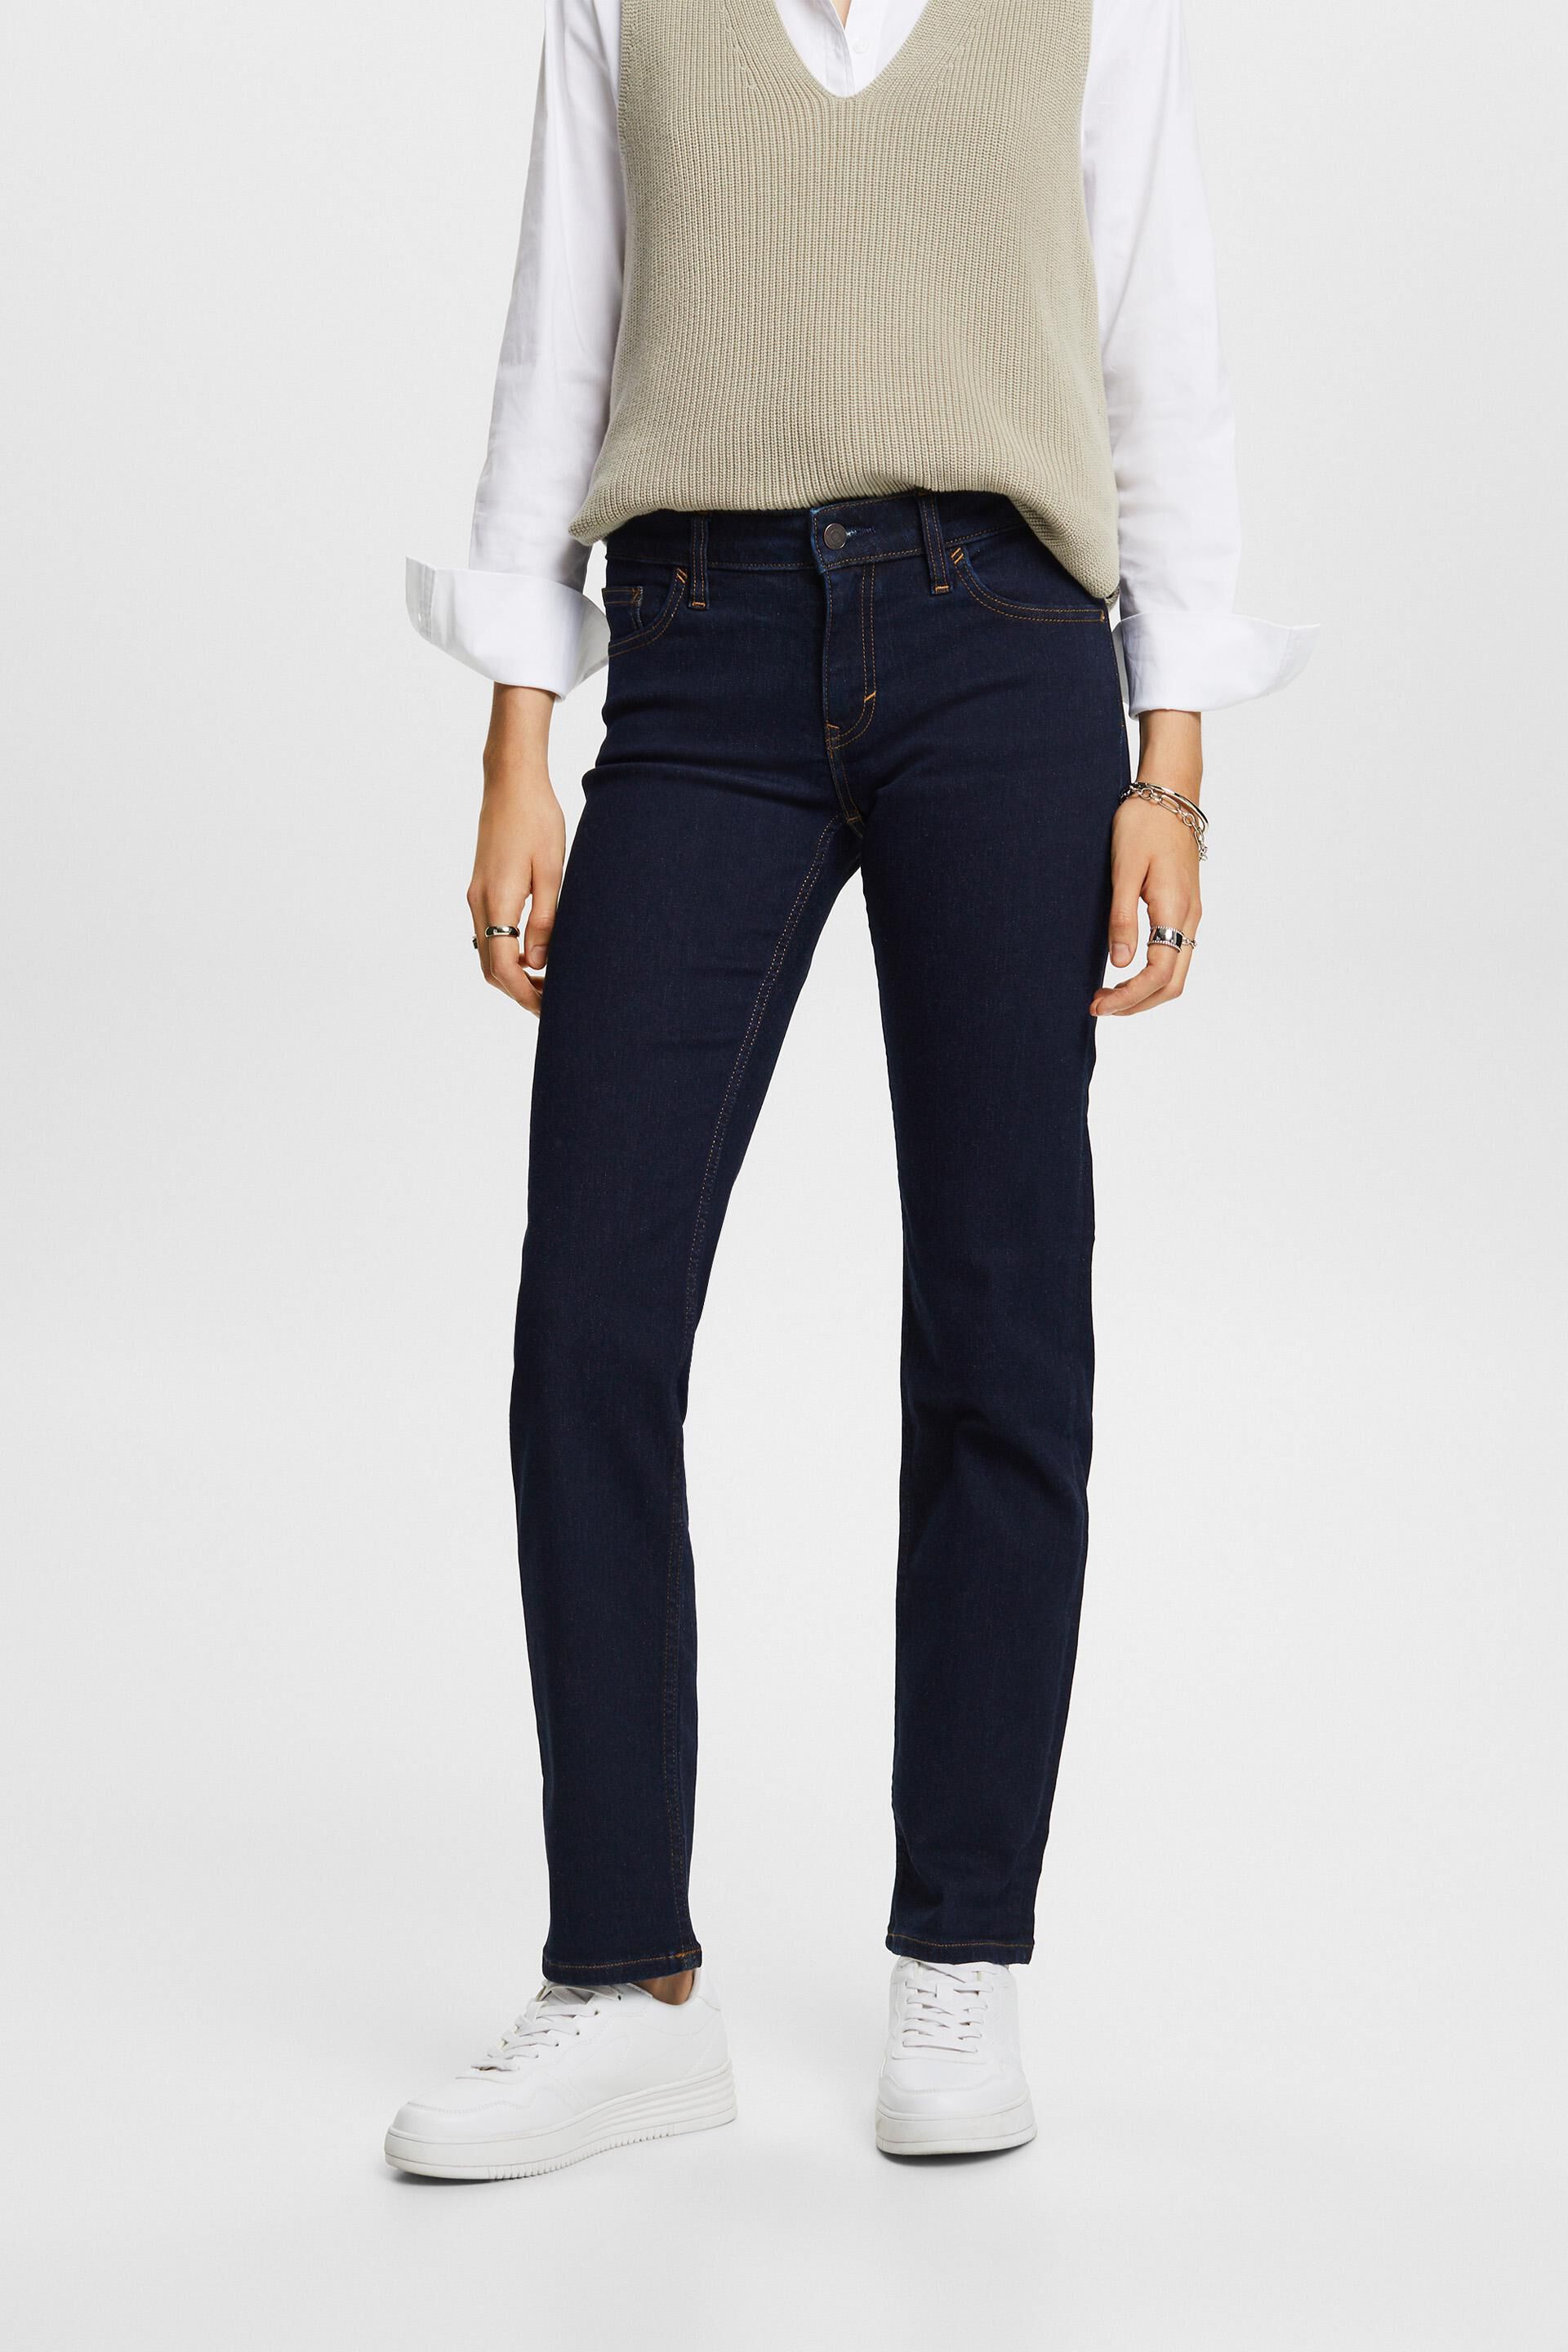 Esprit Damen Straight leg stretch jeans, cotton blend